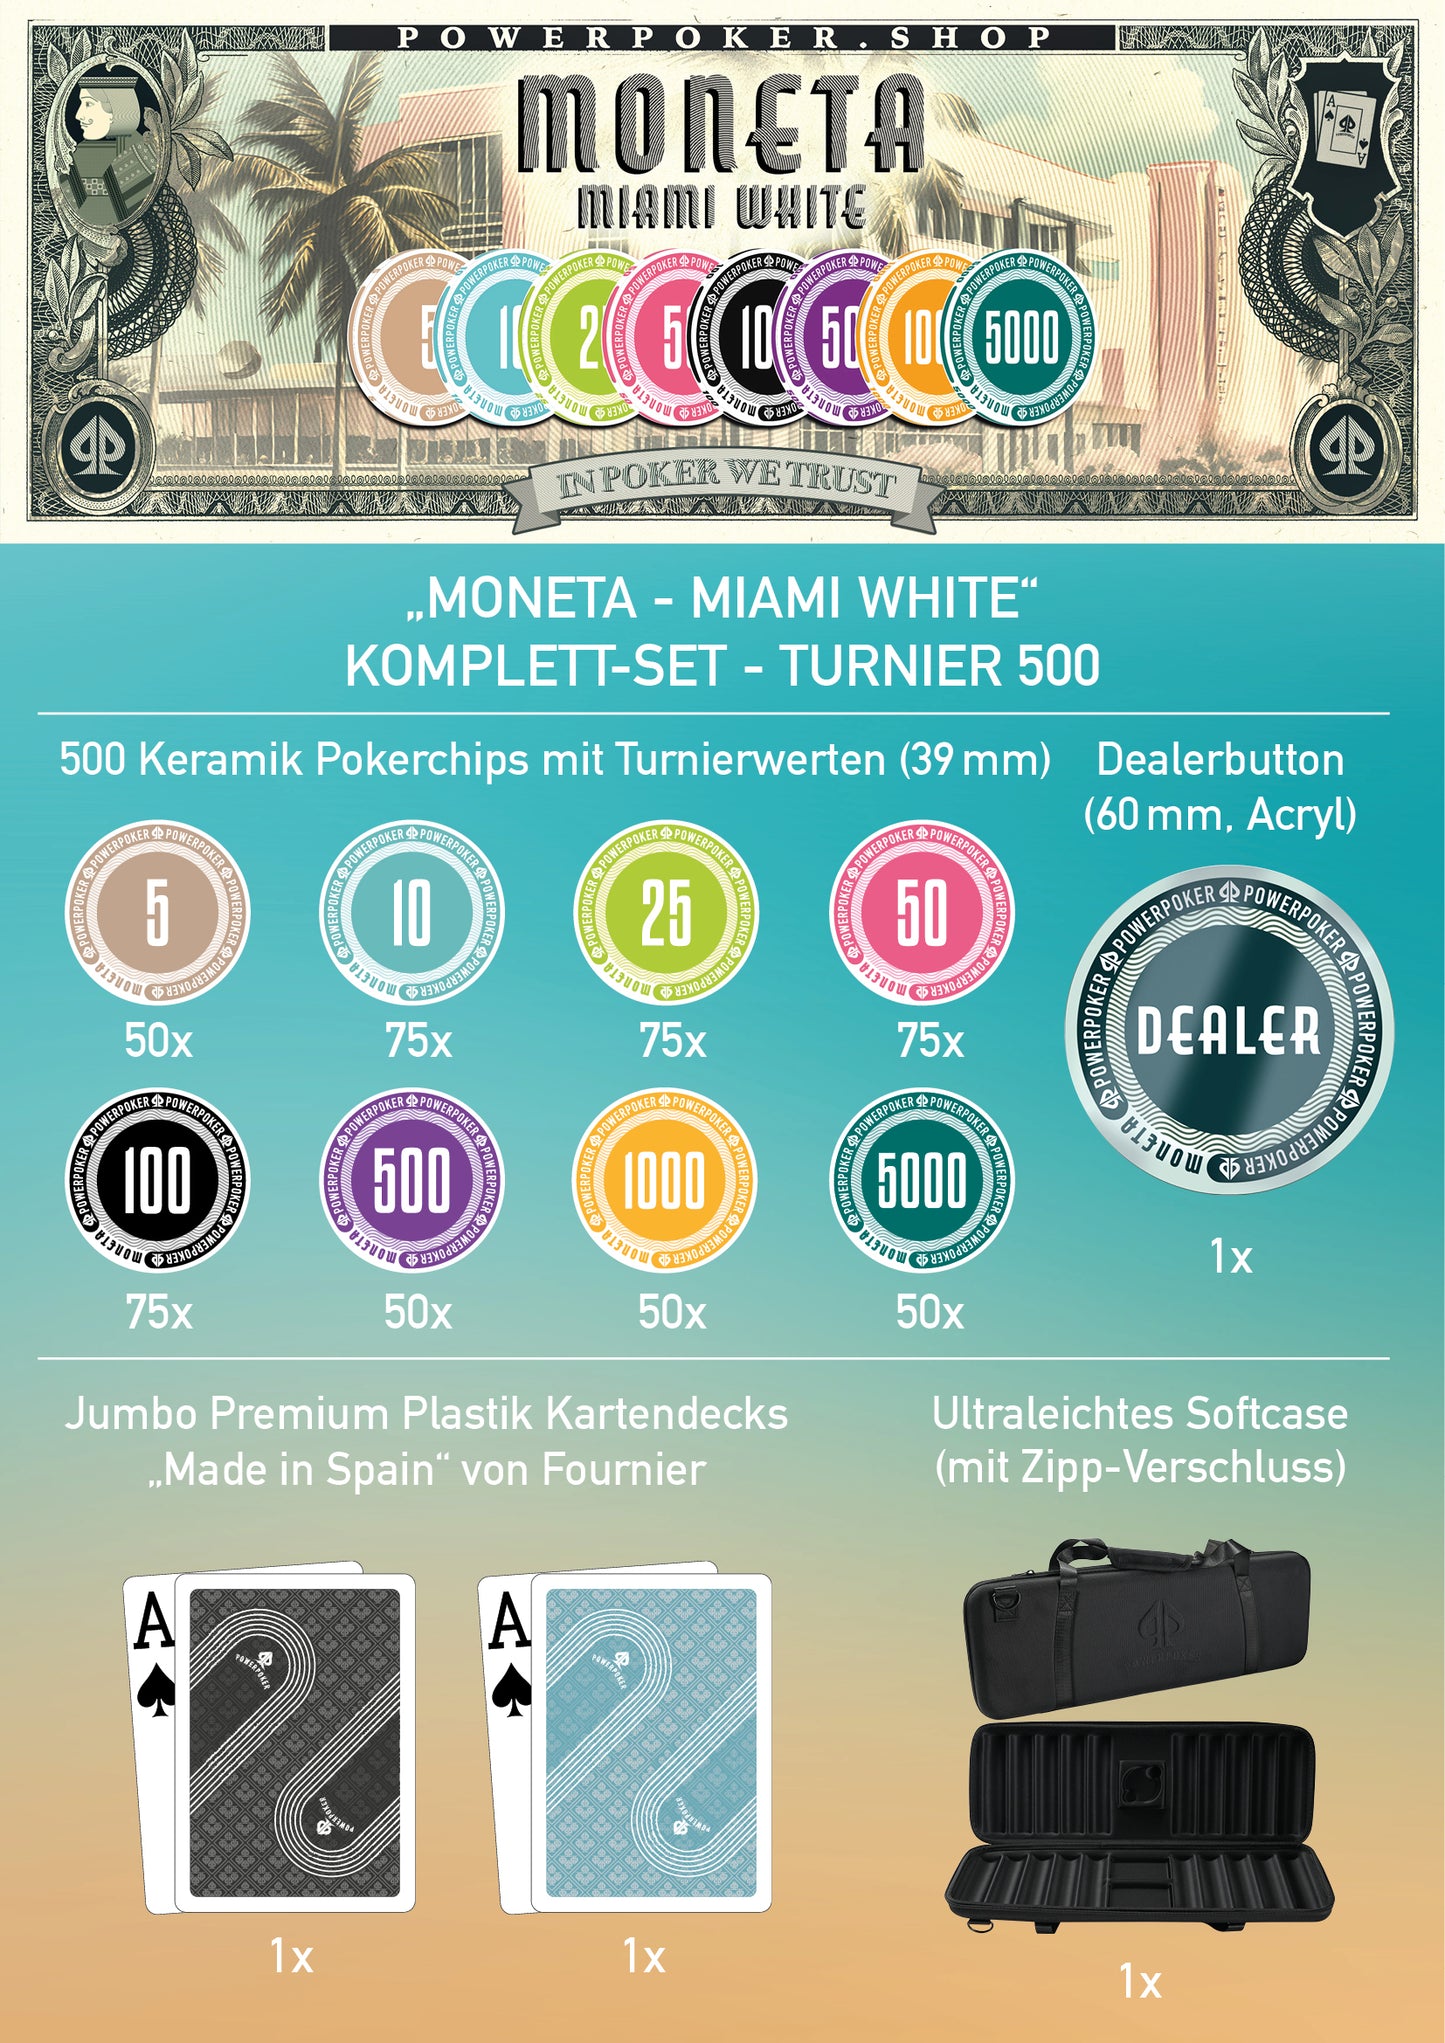 Poker case complete set - Moneta "Miami White" tournament 500